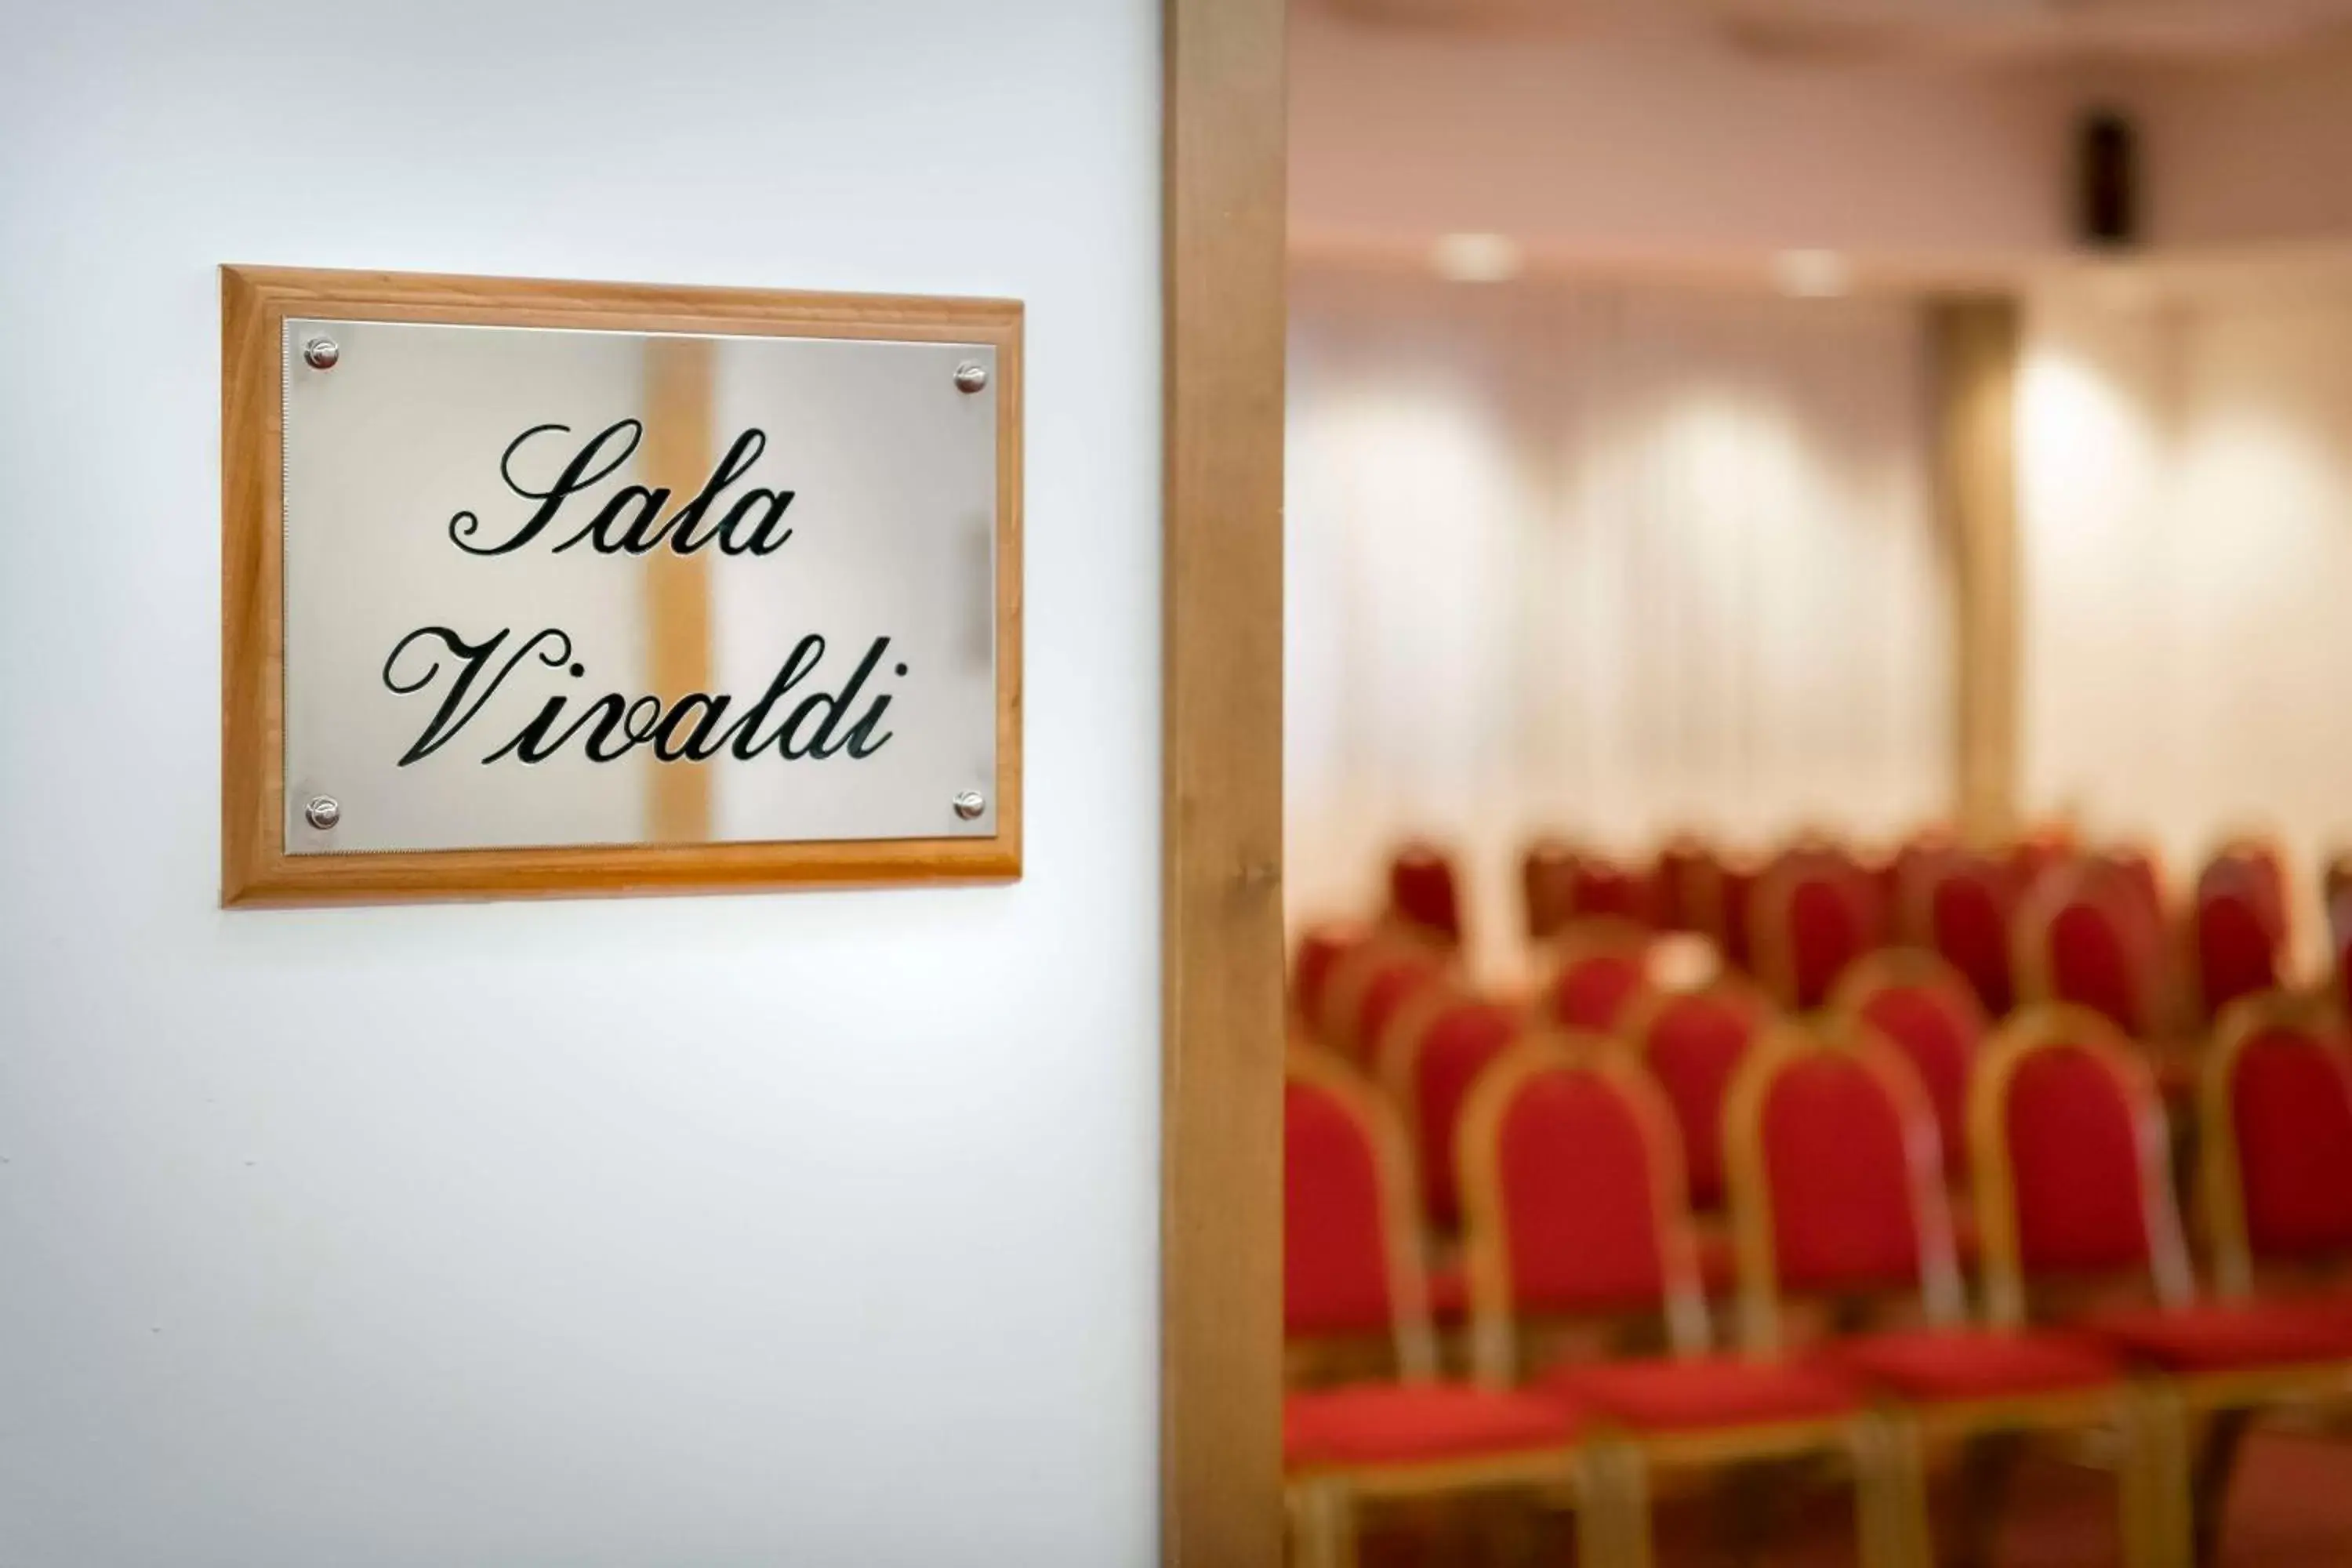 Meeting/conference room in Best Western Cavalieri Della Corona